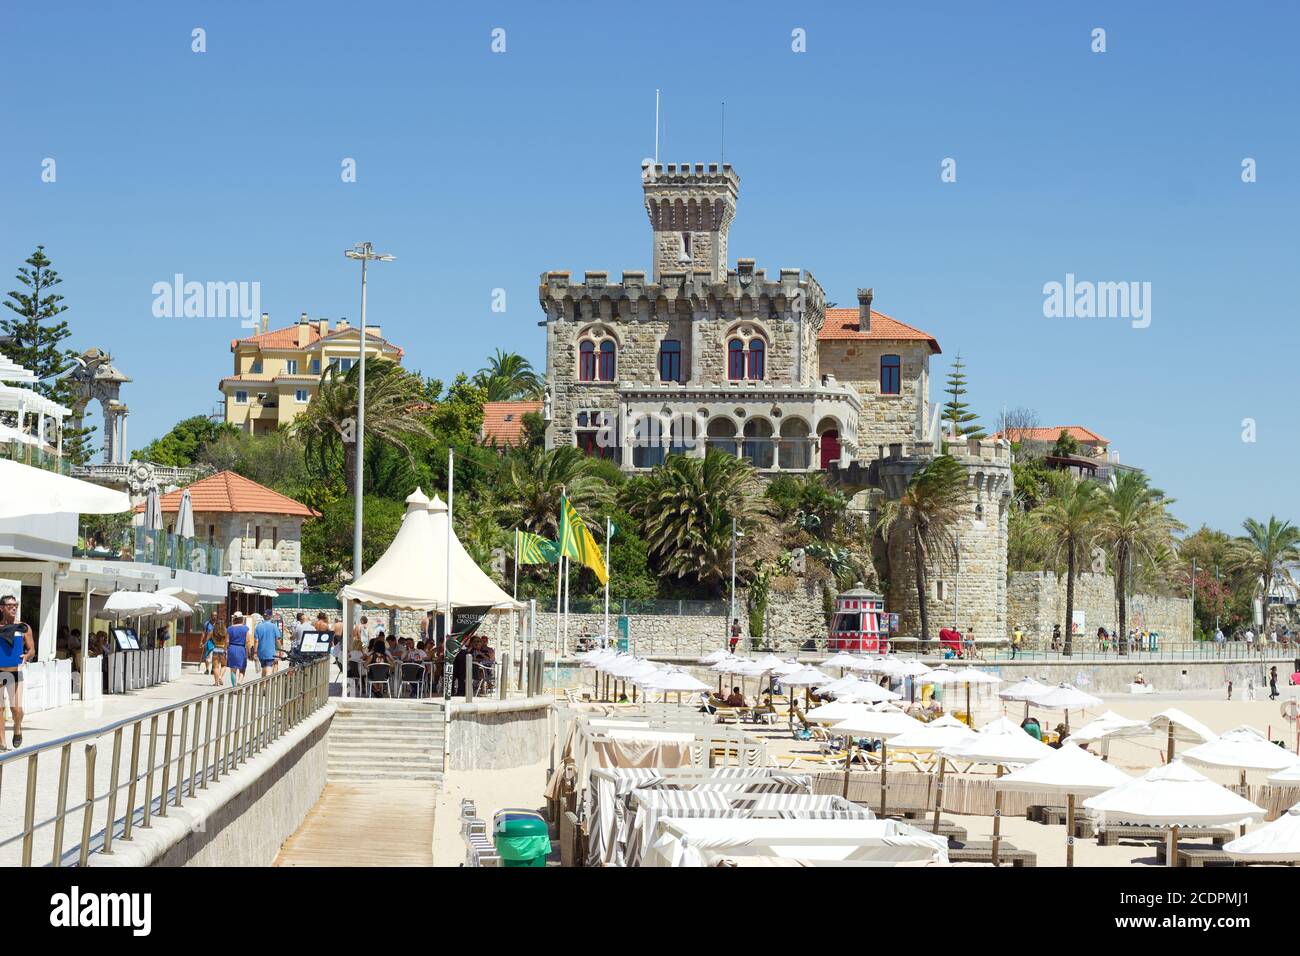 Castle on the beach in Estoril Stock Photo